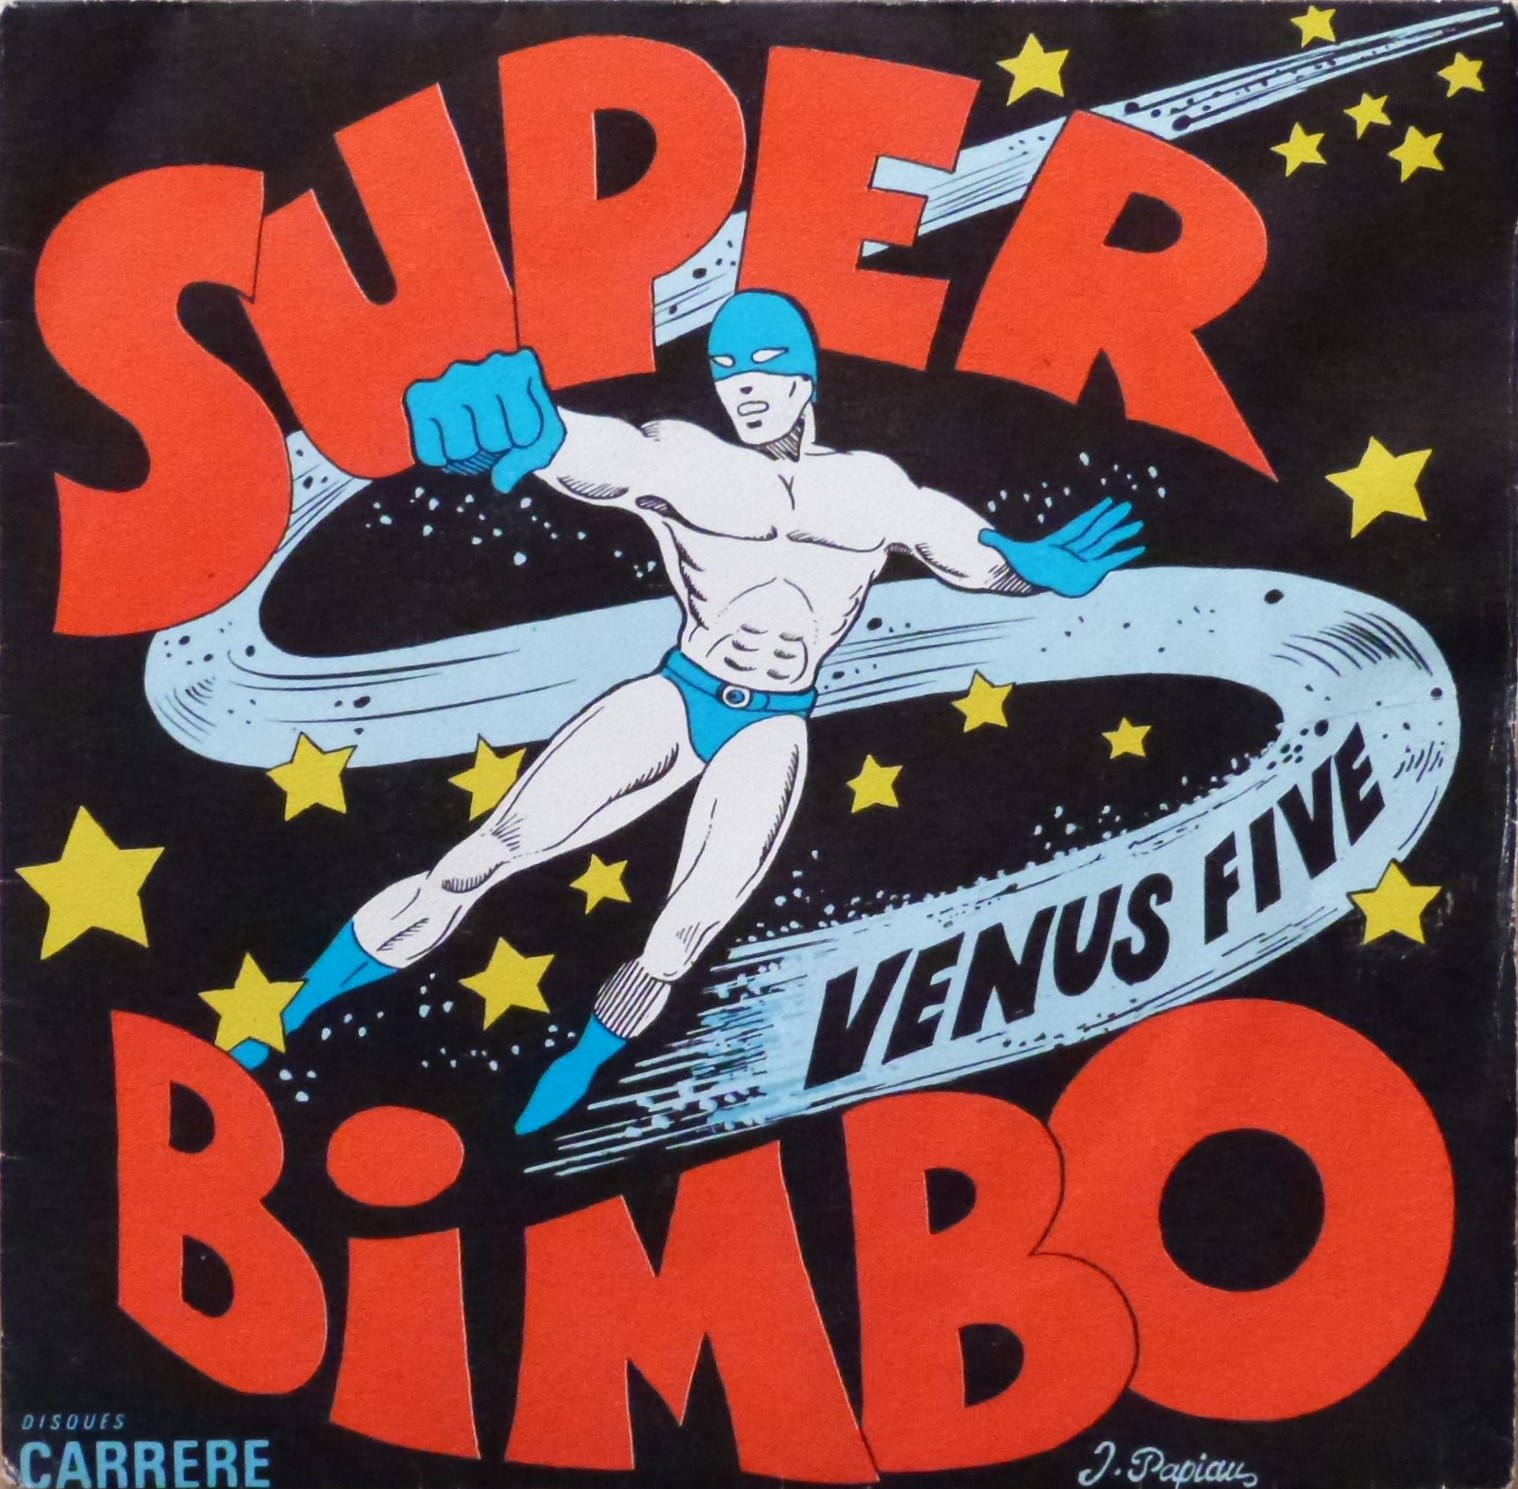 Super Bimbo